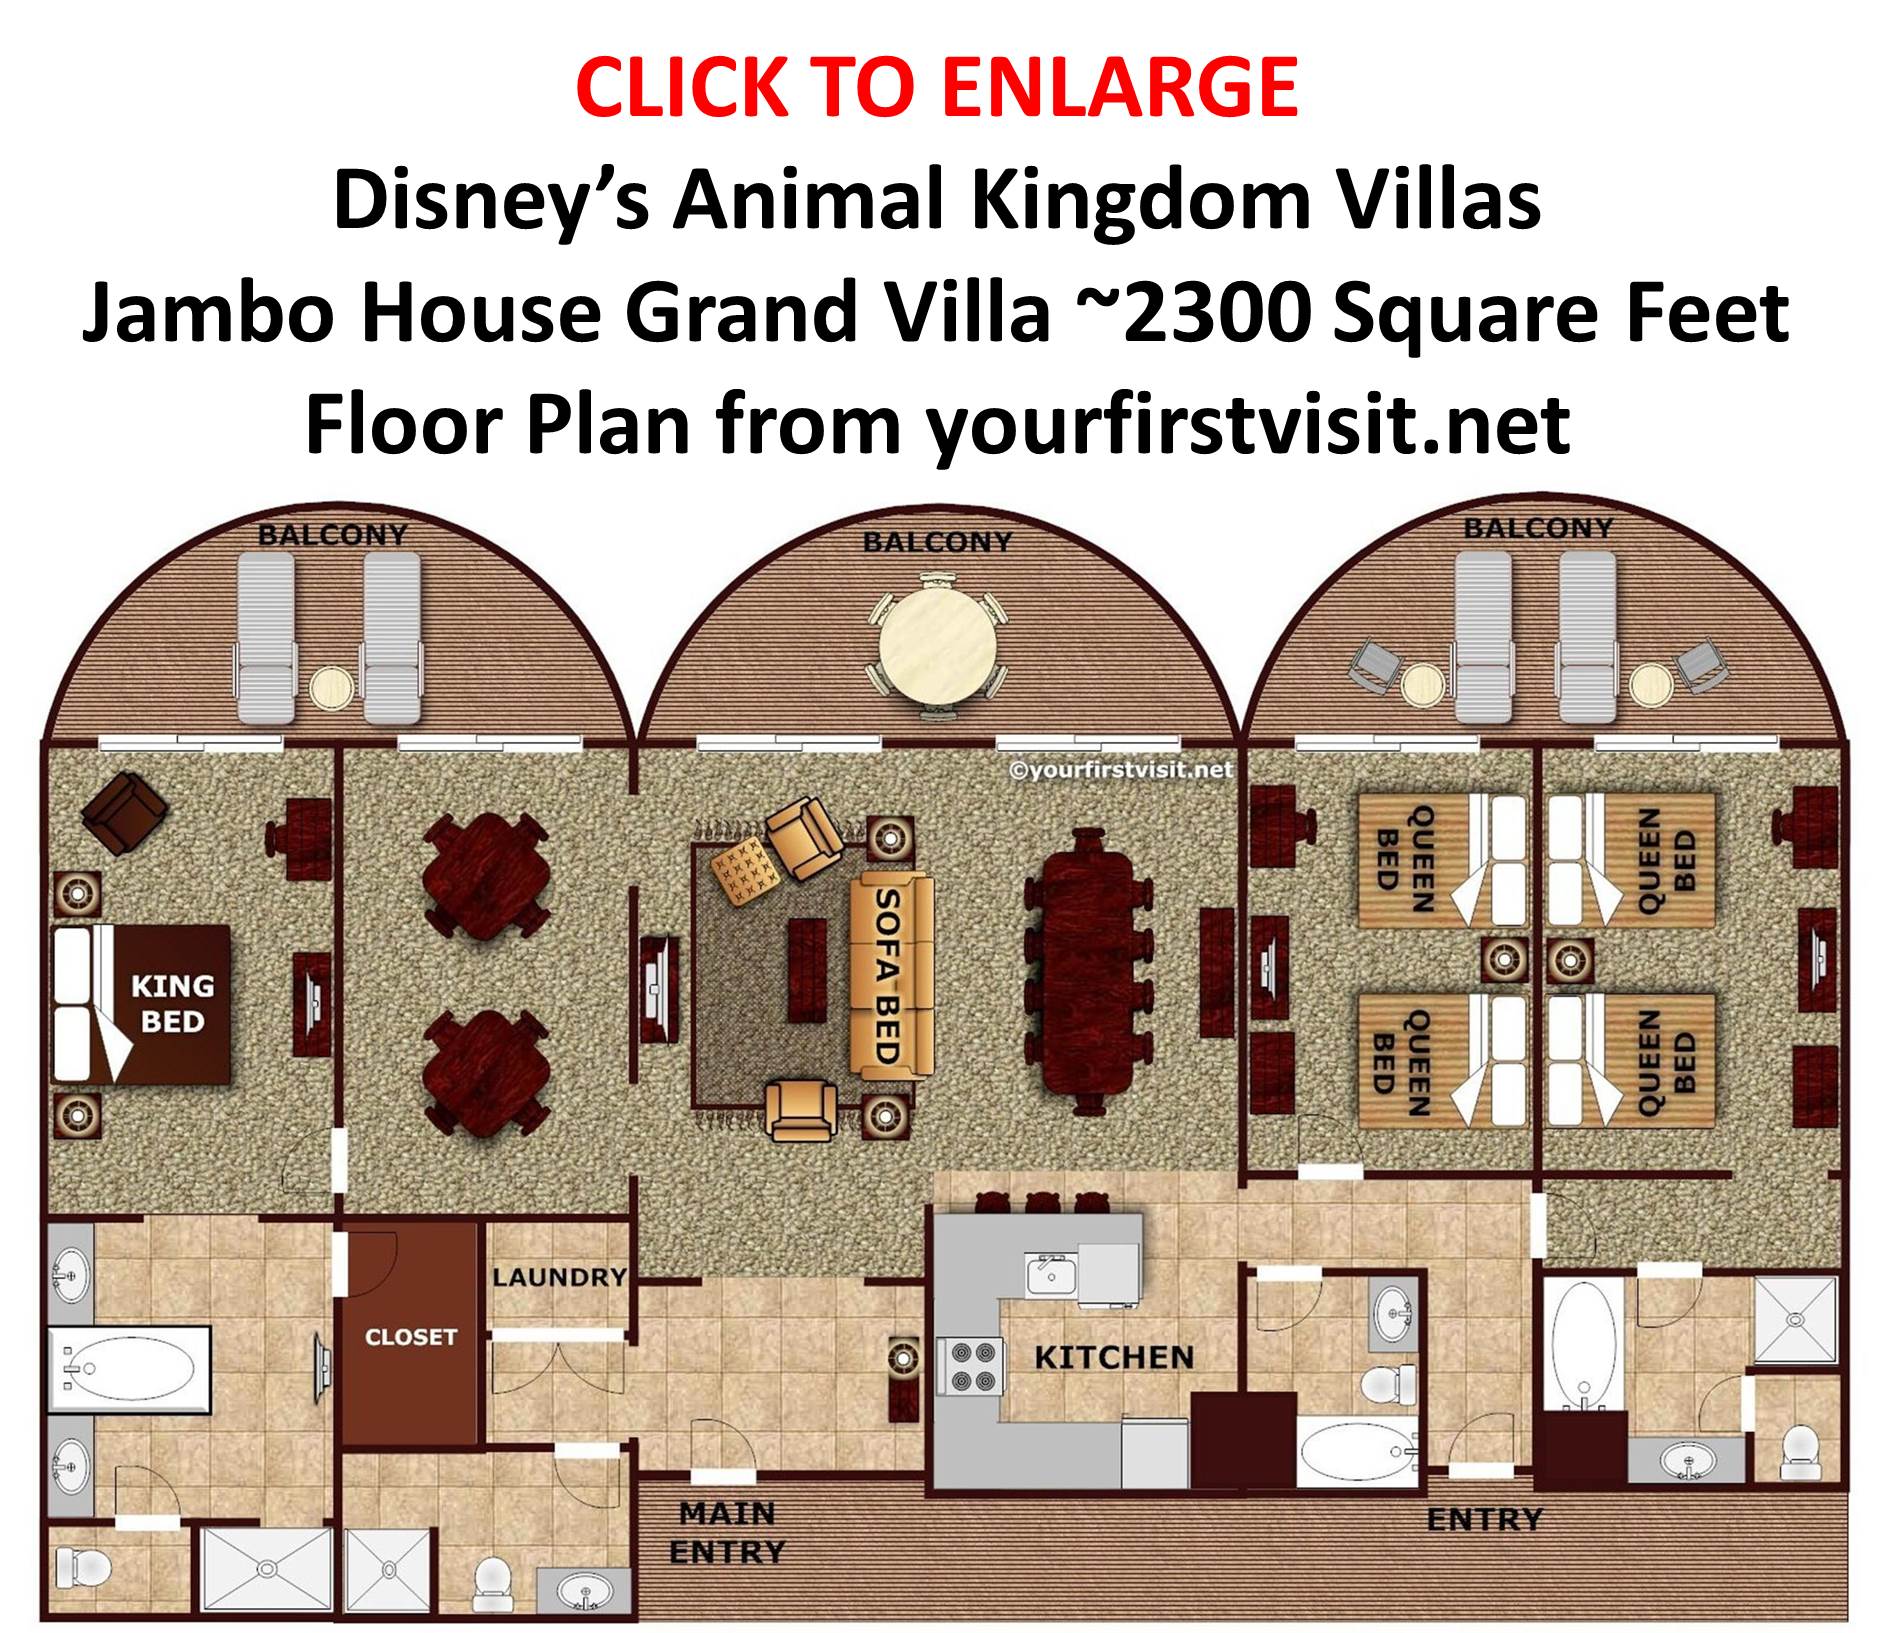 The Disney Vacation Club ("DVC") Resorts at Walt Disney World